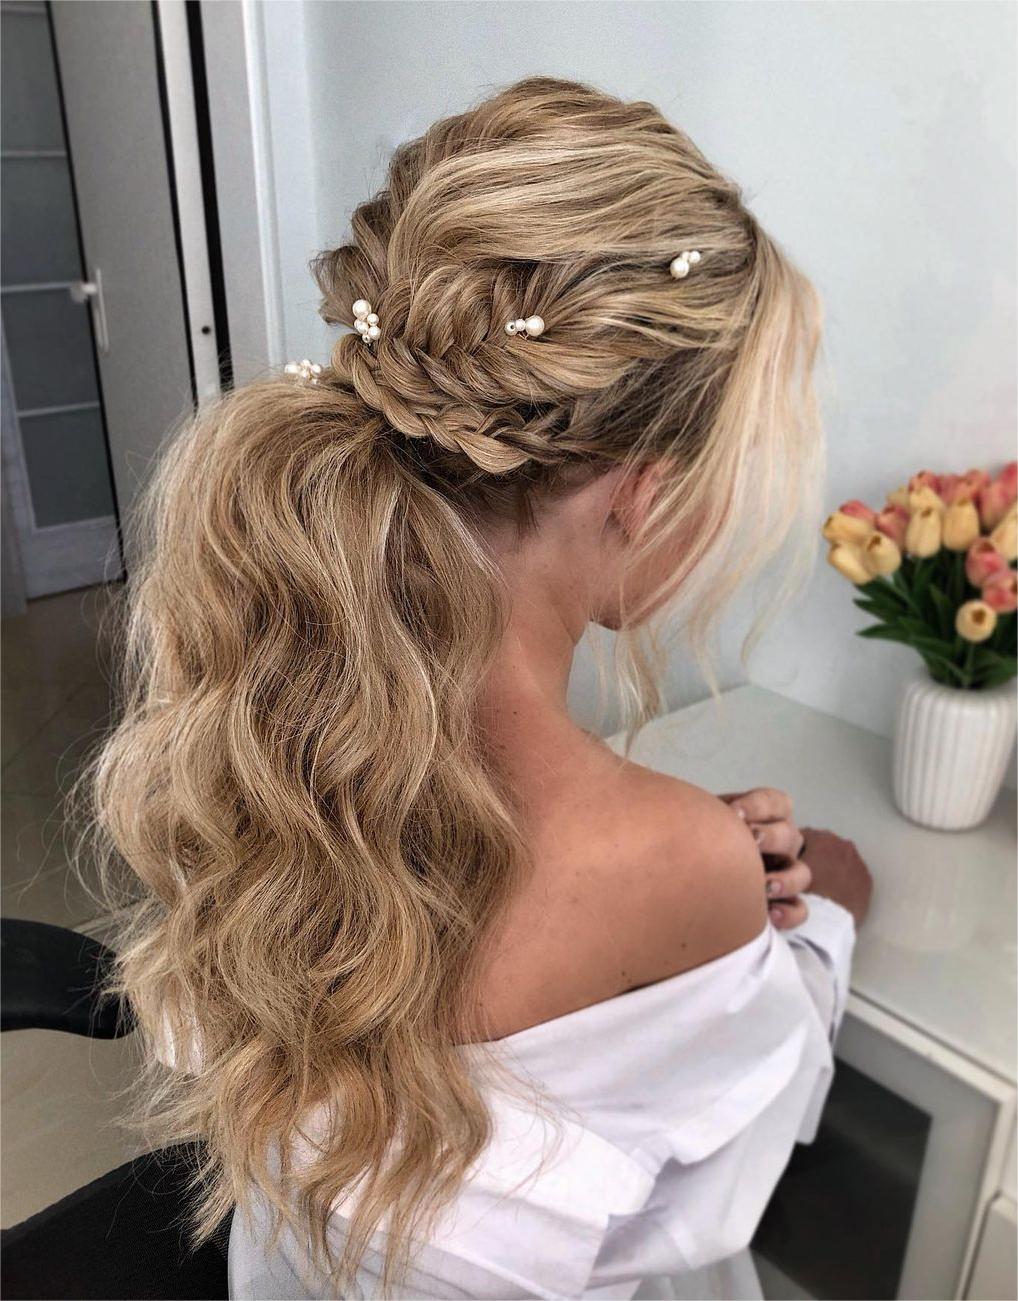 low ponytail hairstyles for prom with braids via zhanna_syniavska